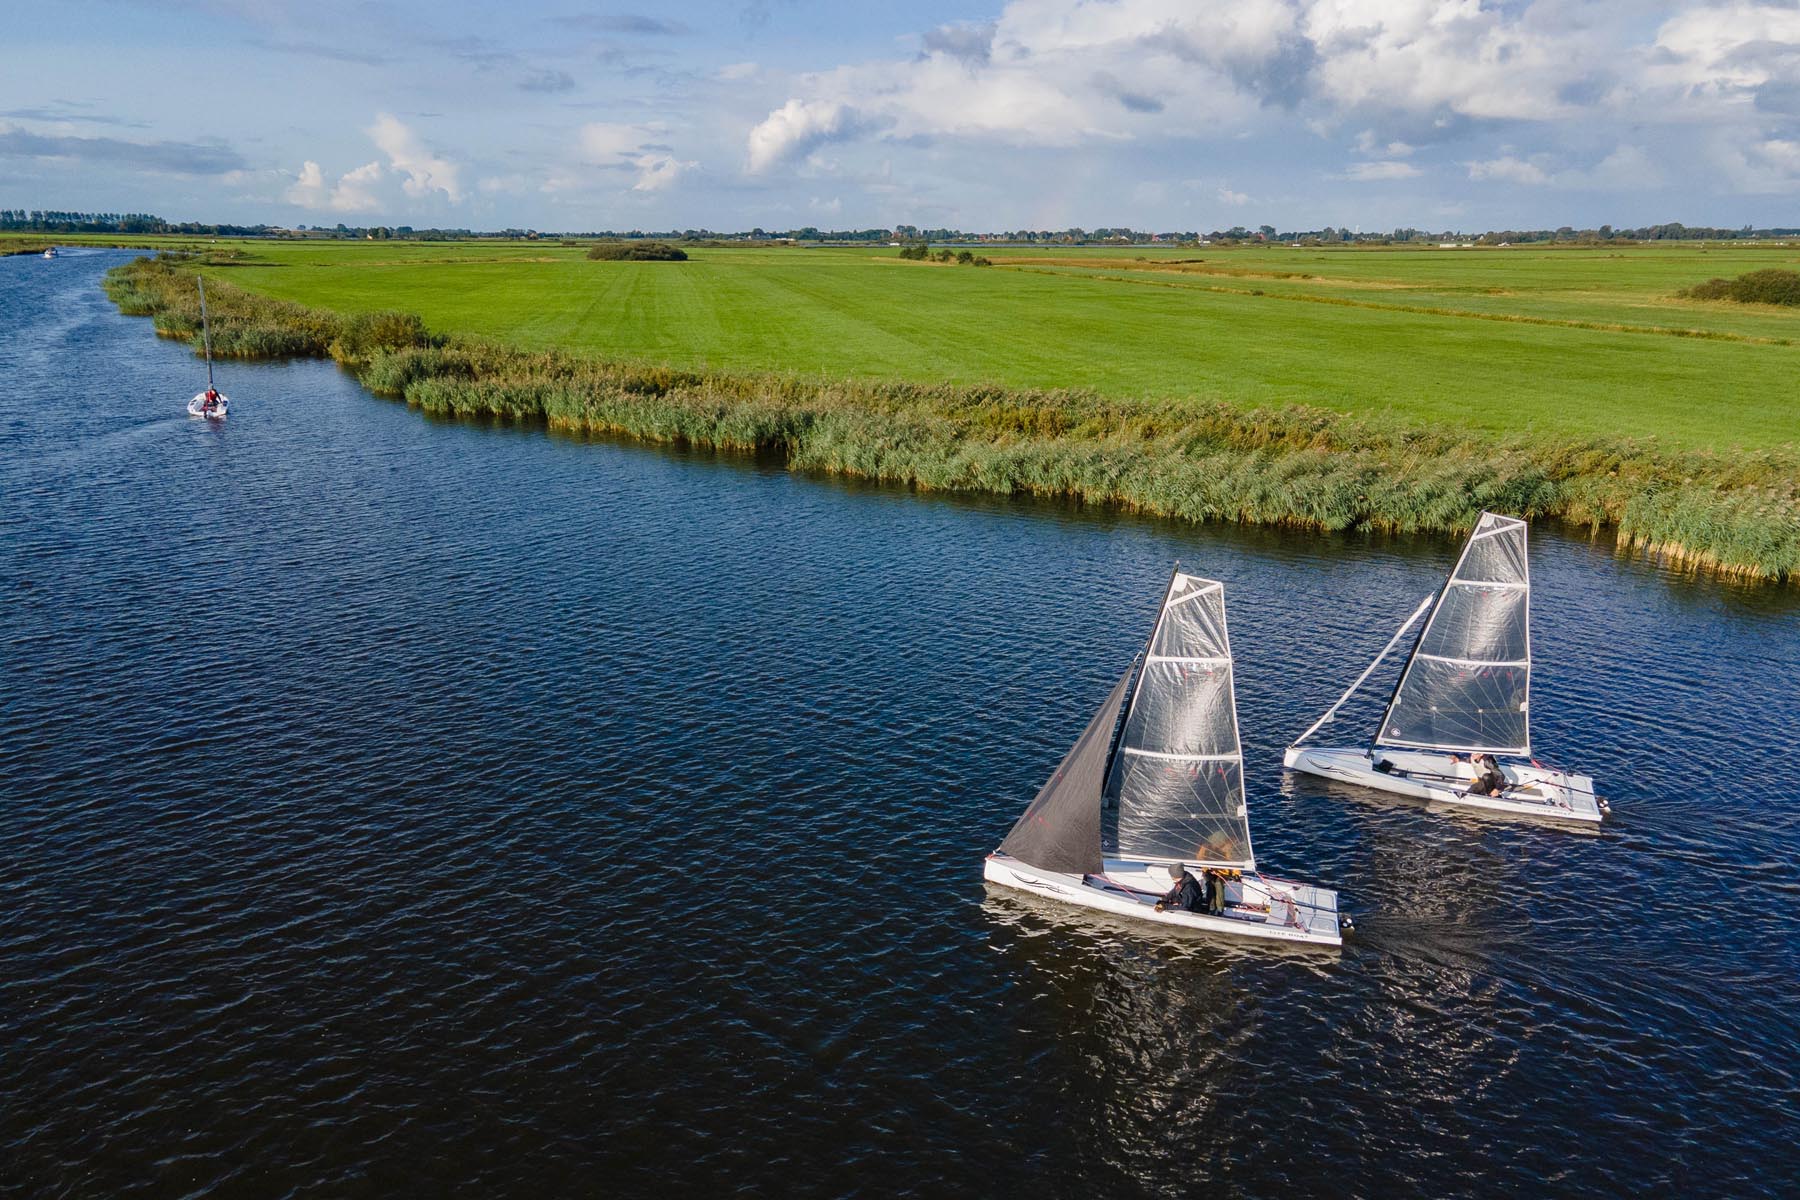 liteboat-xp16-row-sail-boat-netherlands-friesland-6